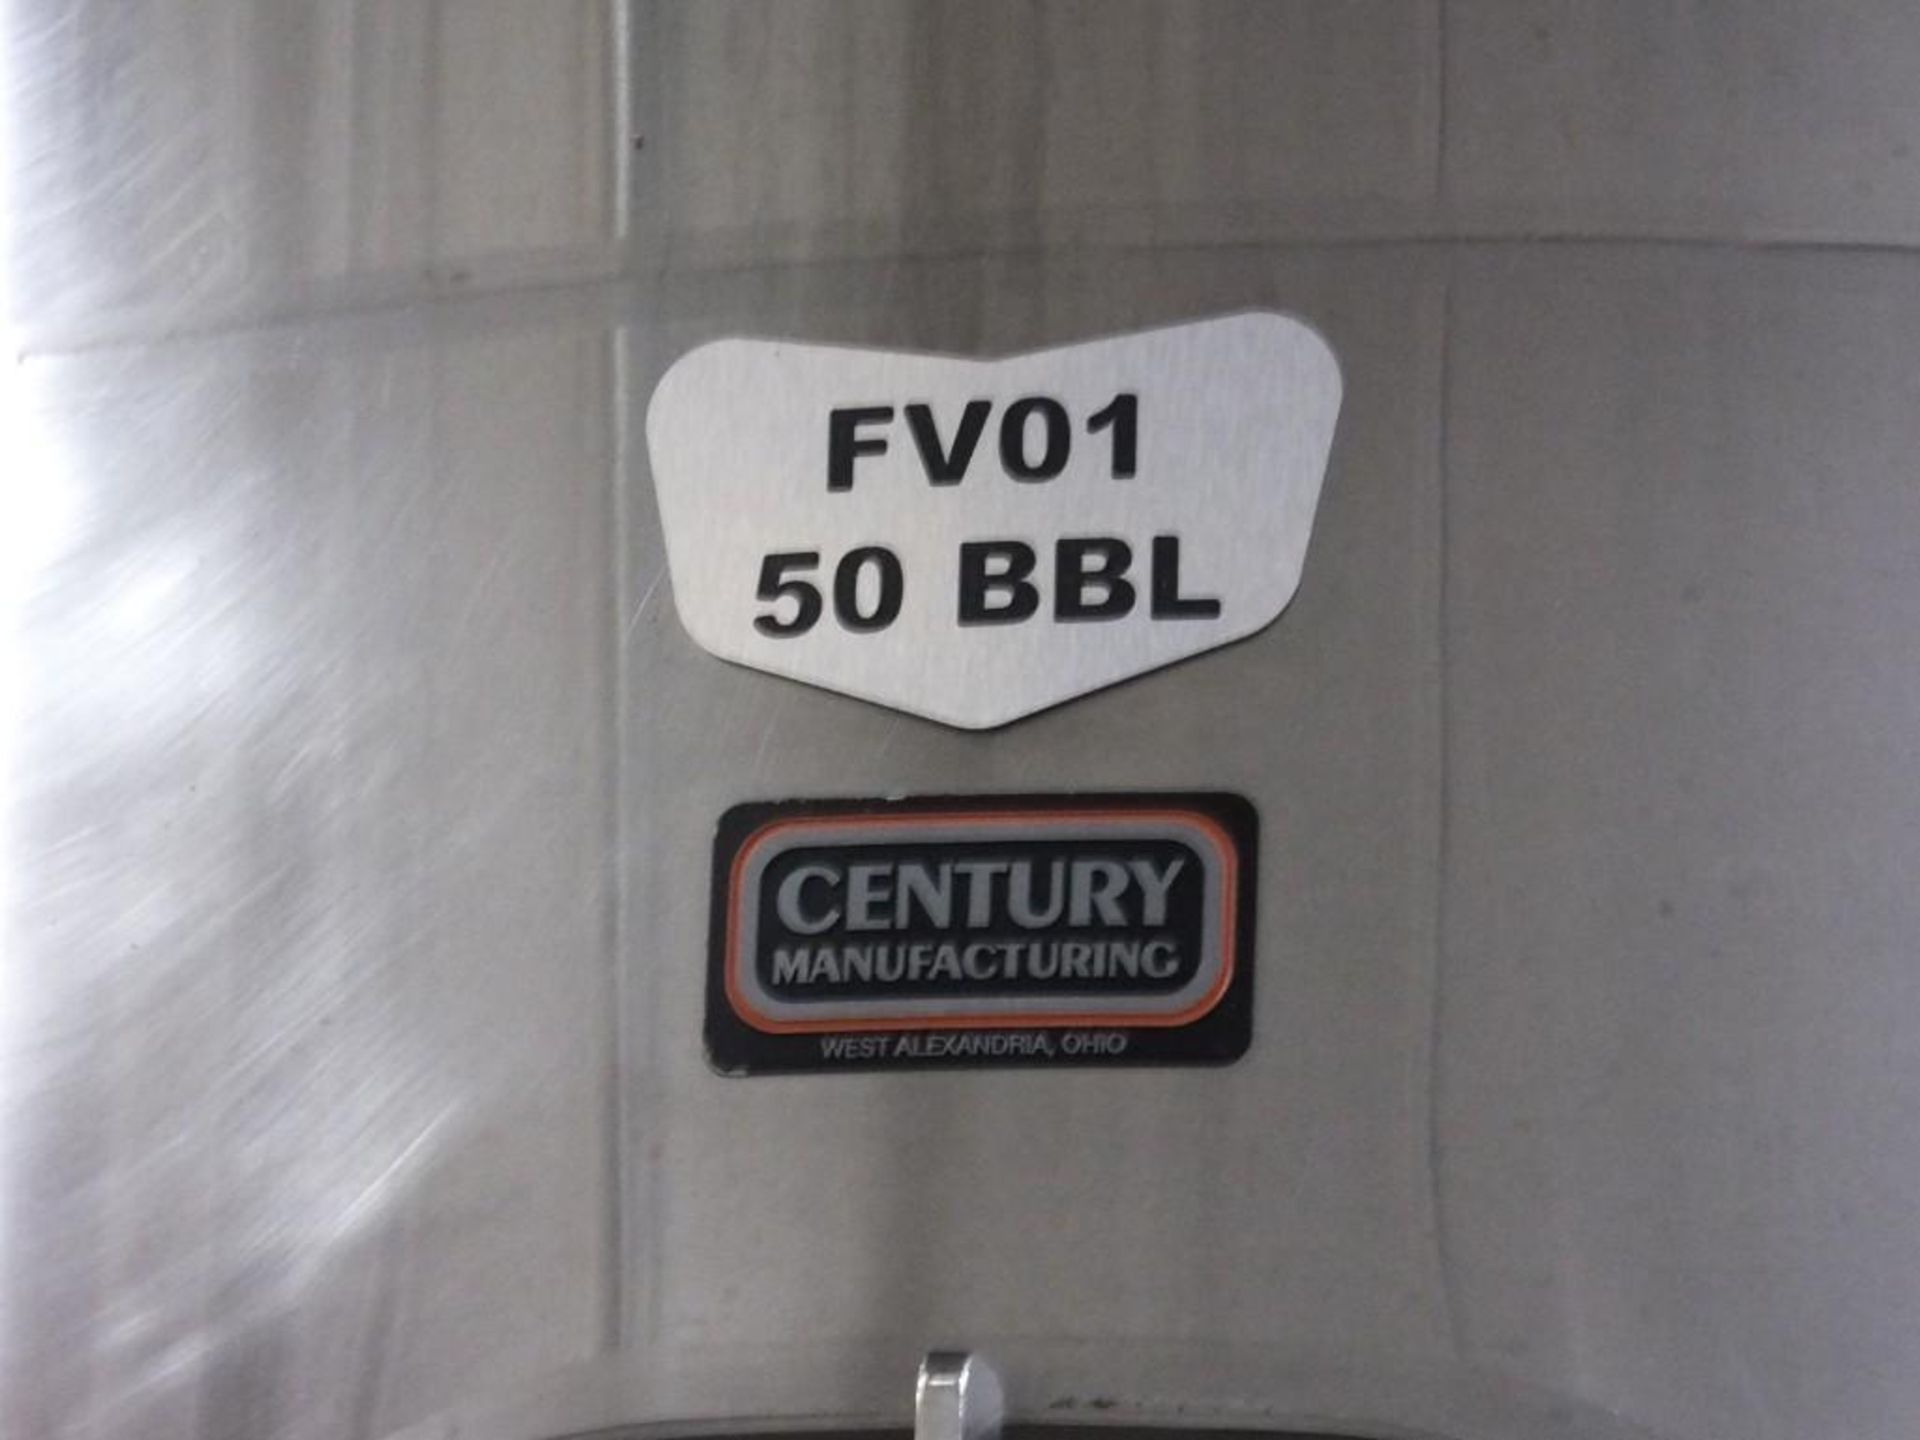 1994 Century Manf FV01 50 BBL S/S Jacketed Fermentation Tank - Image 3 of 5